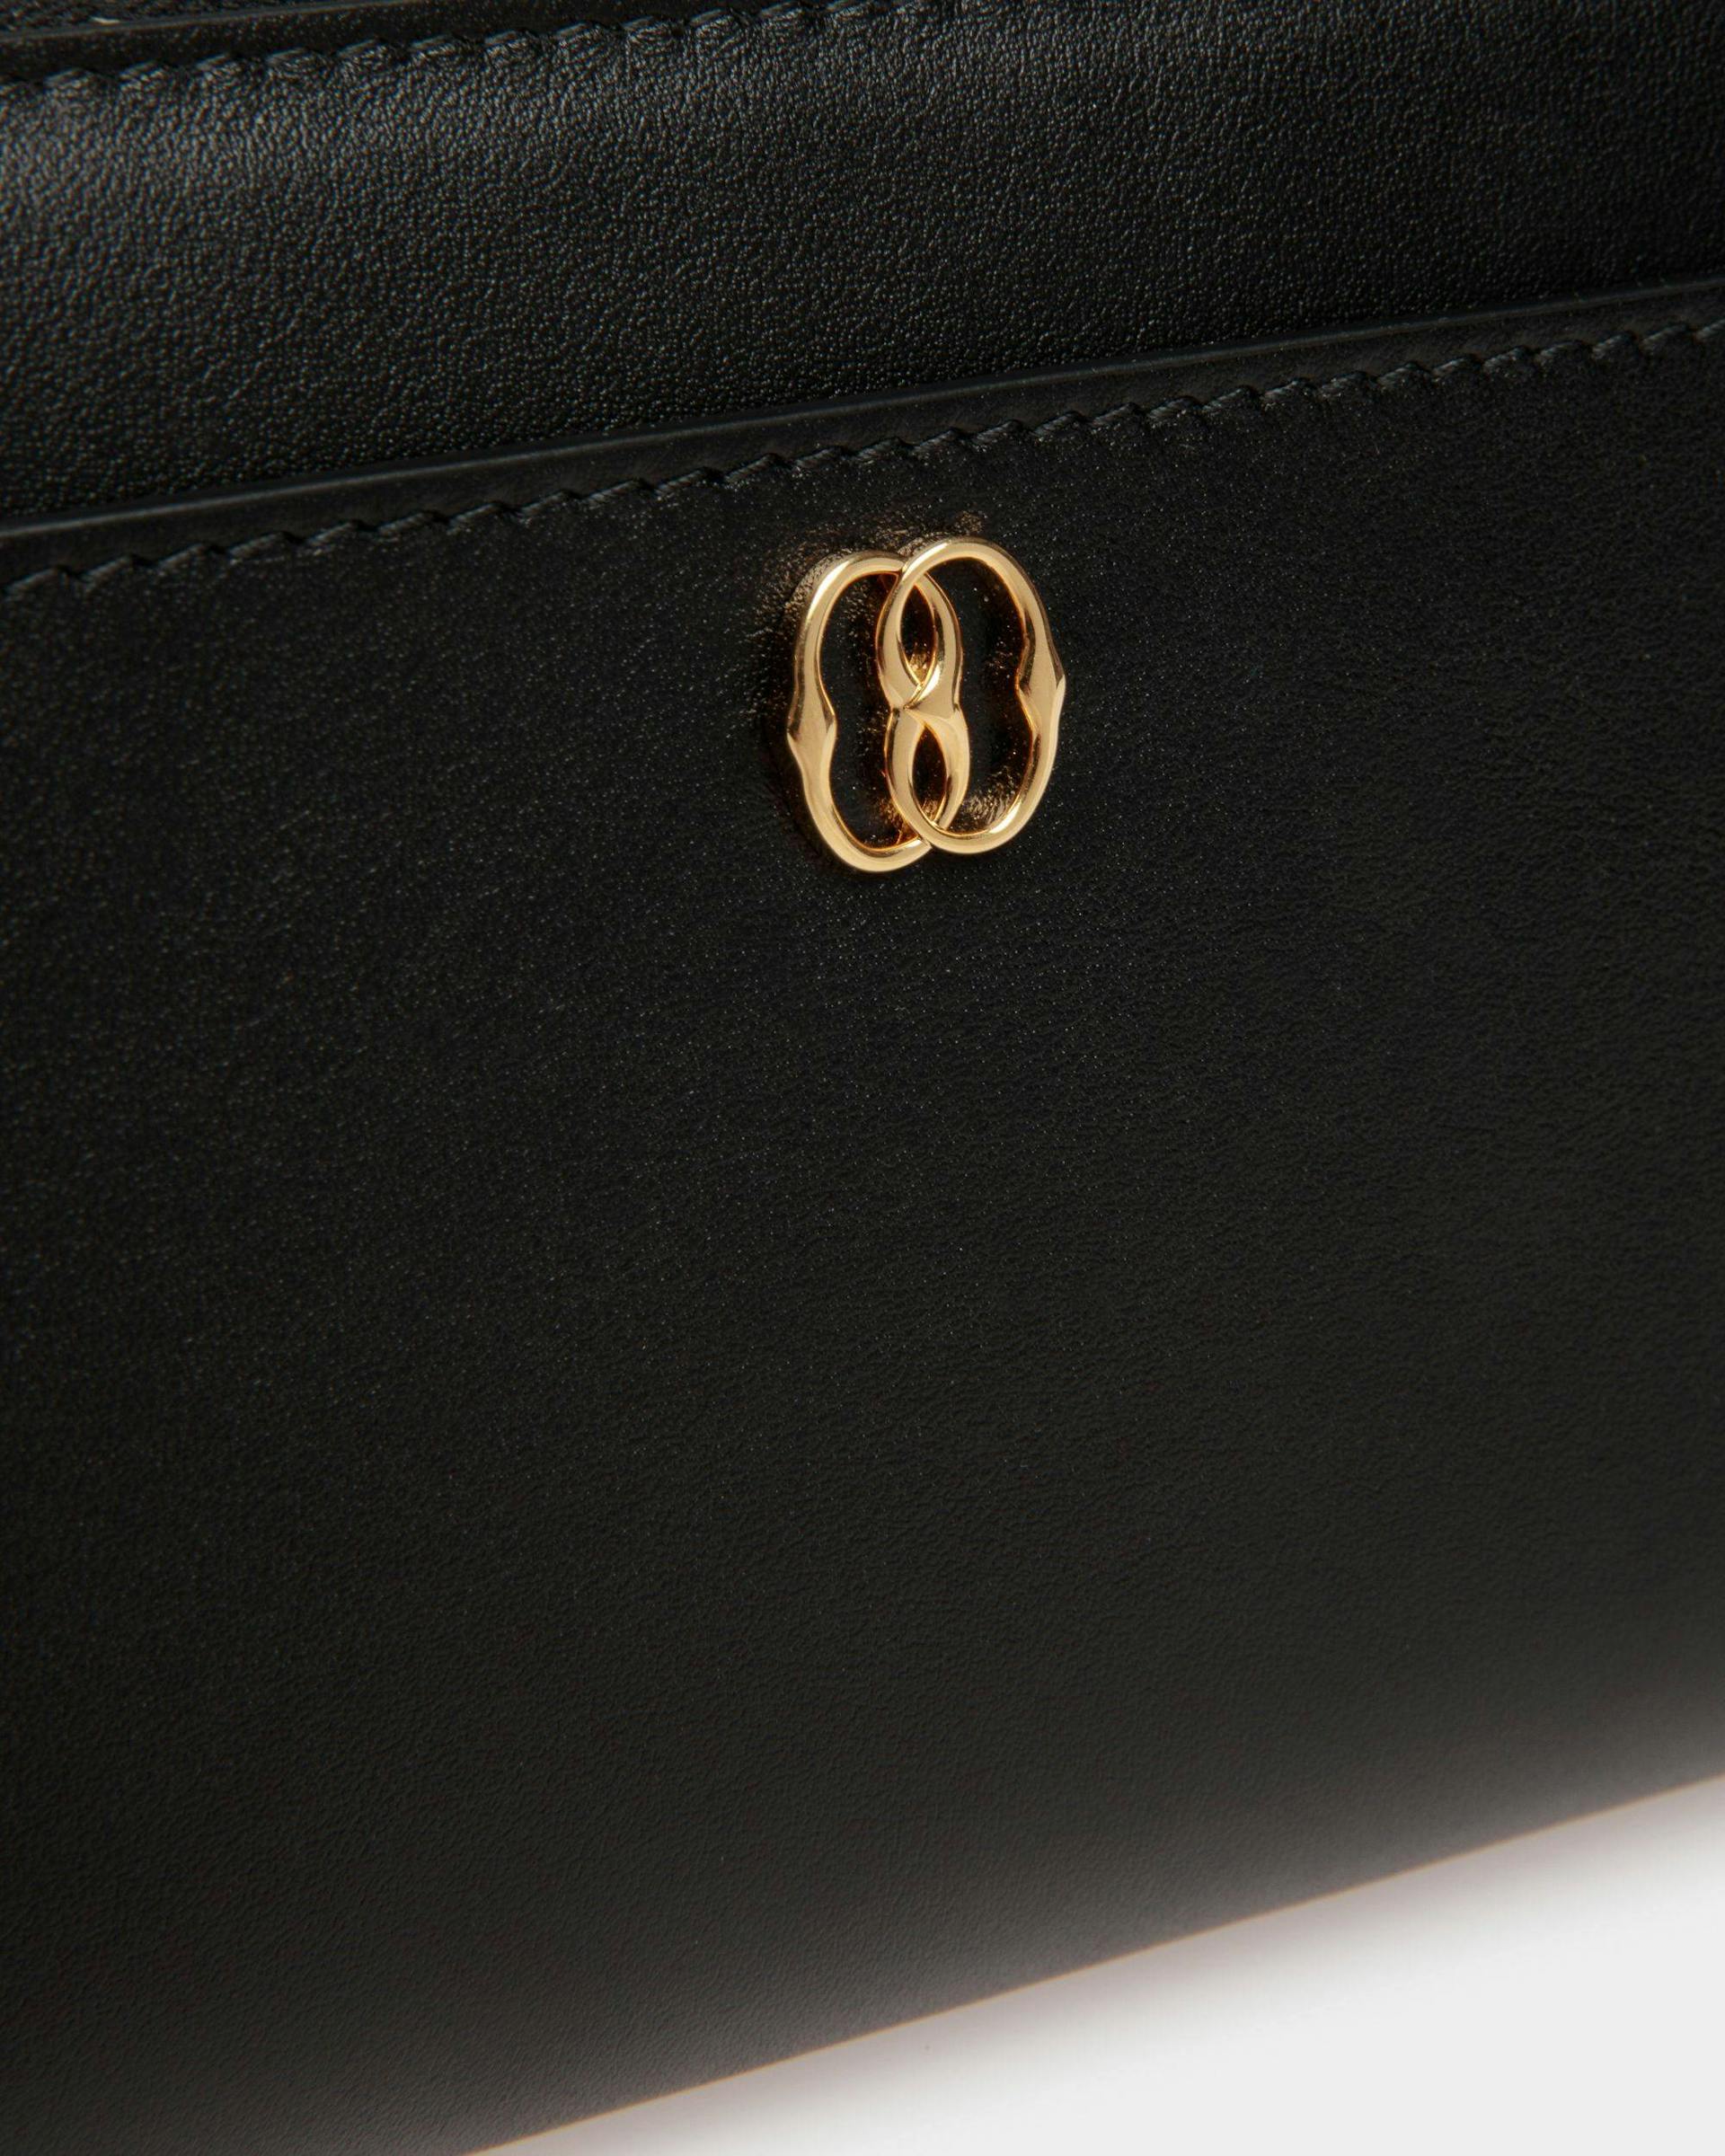 Women's Emblem Long Wallet in Black Leather | Bally | Still Life Detail